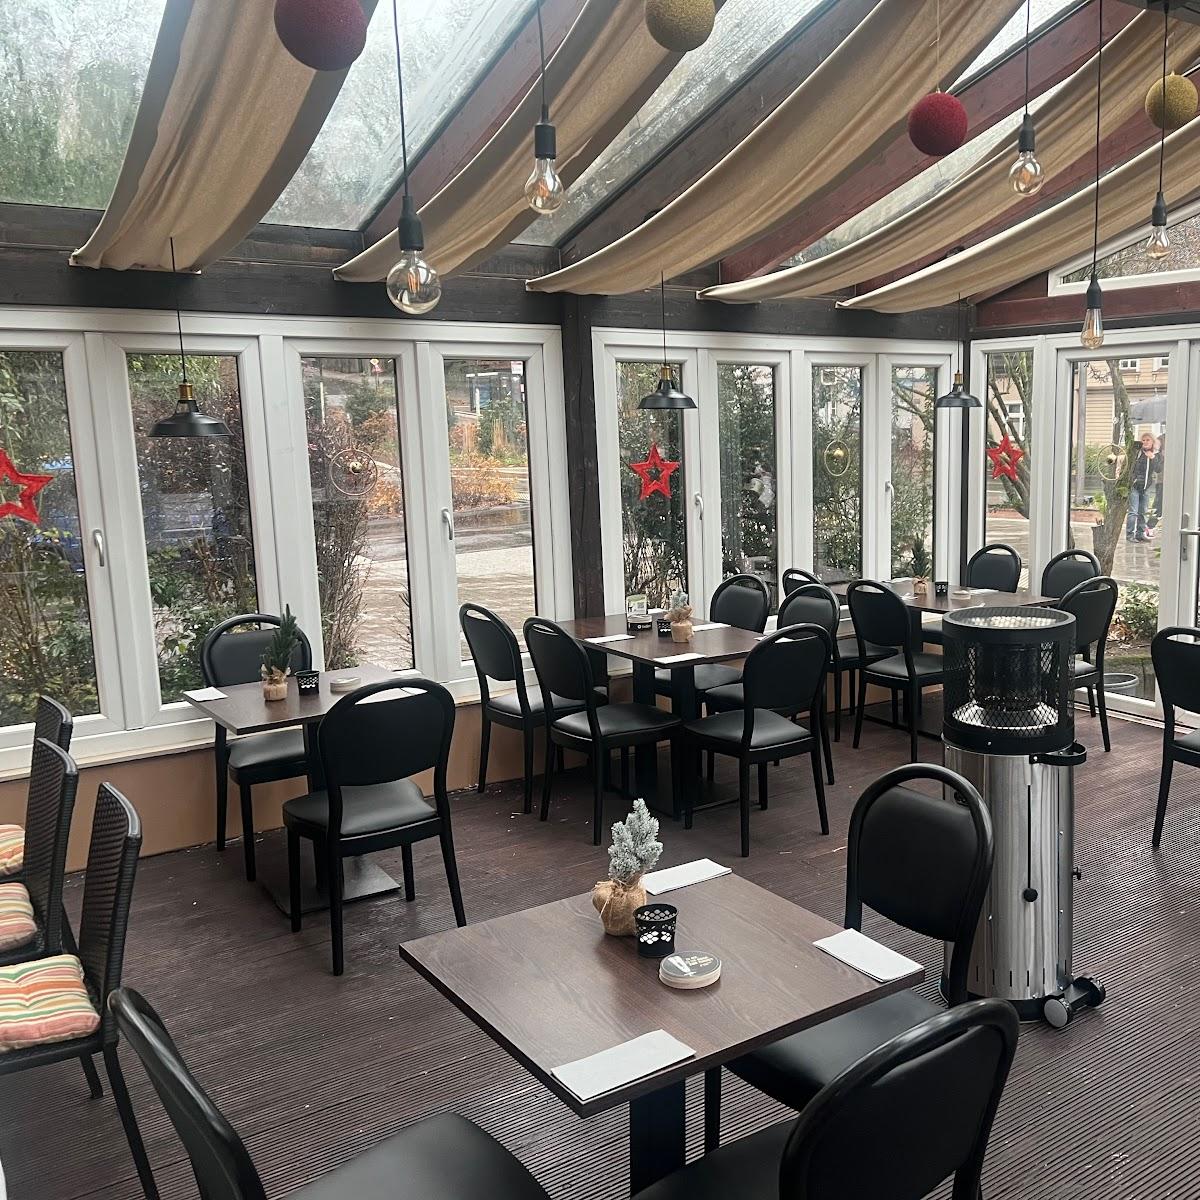 Restaurant "El Greco im er Hof" in Mettmann